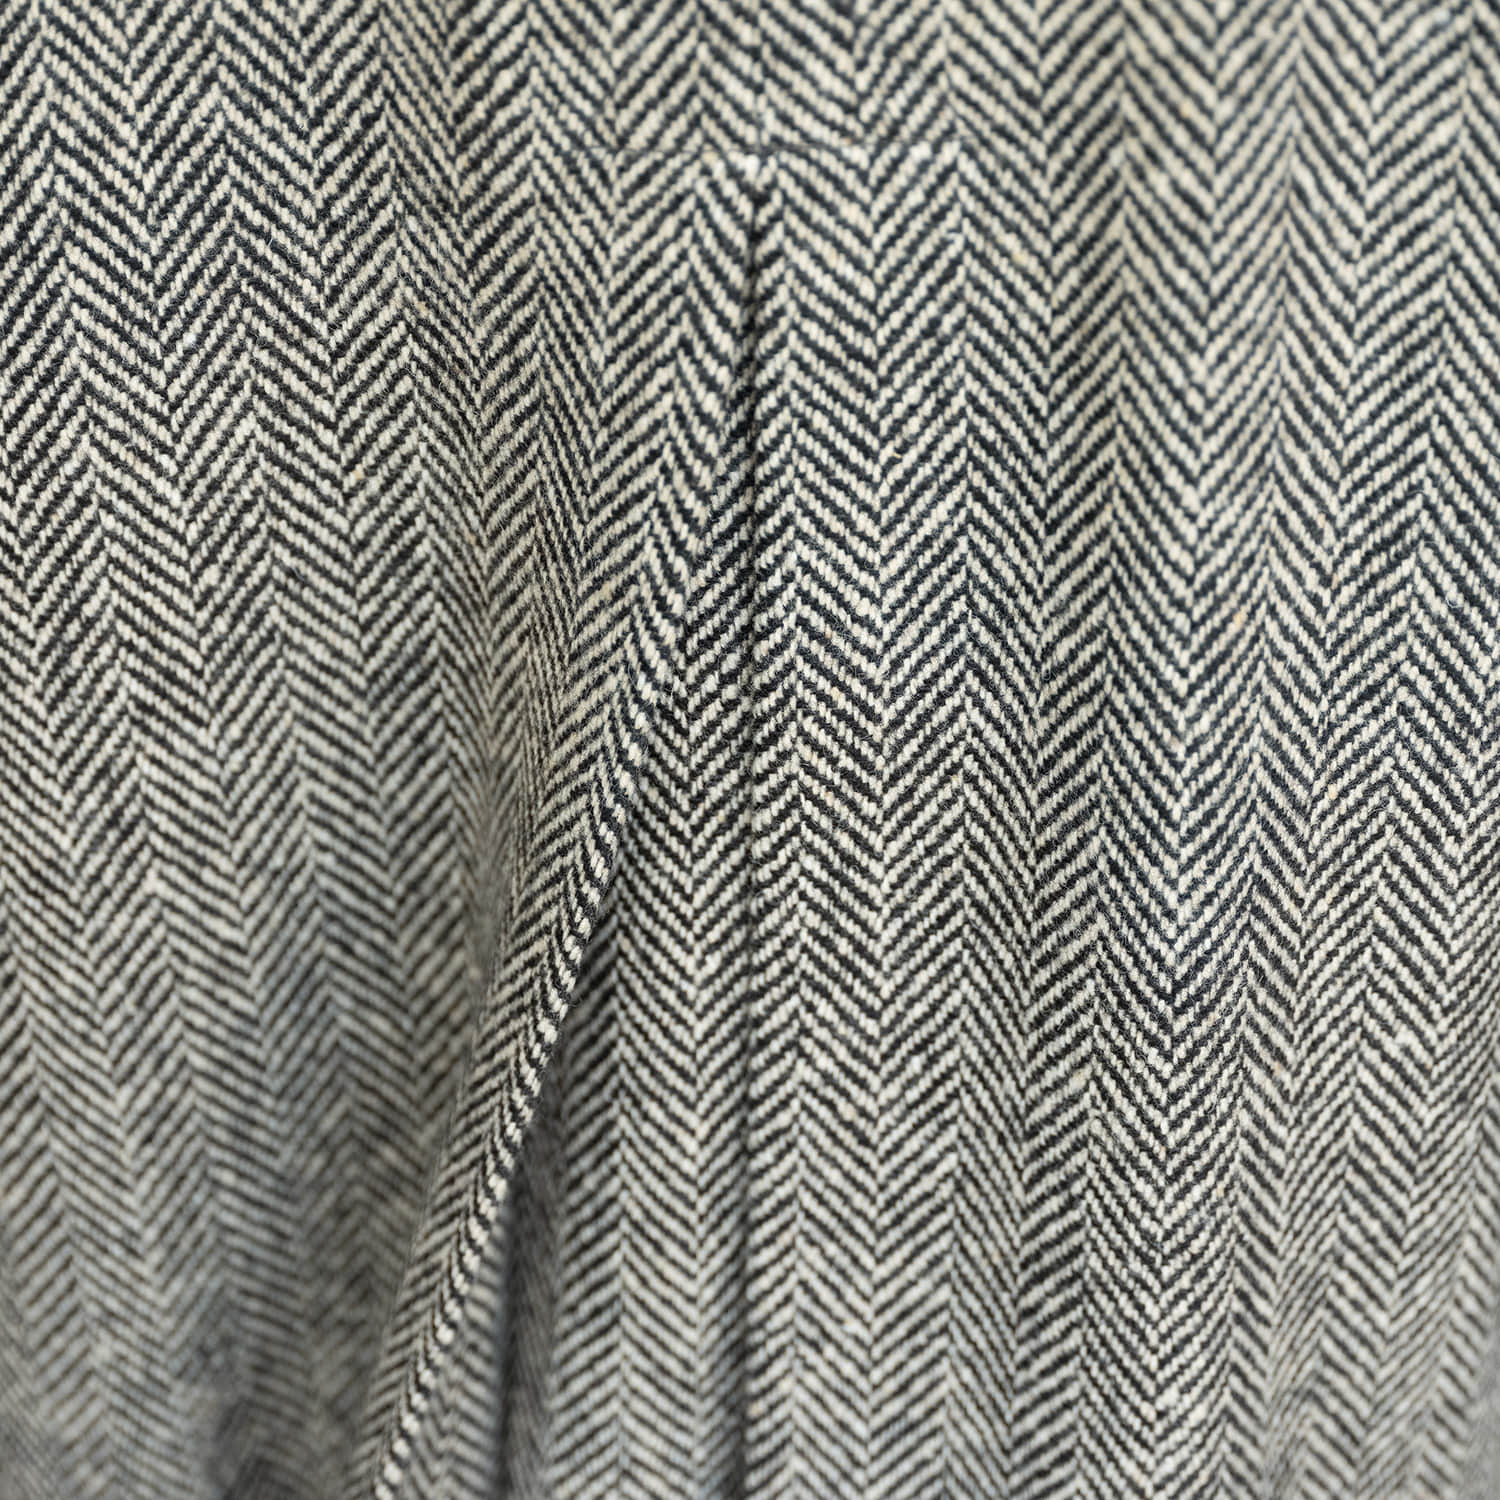 Donegal Tweed Curve Sleeve Coat - Grey